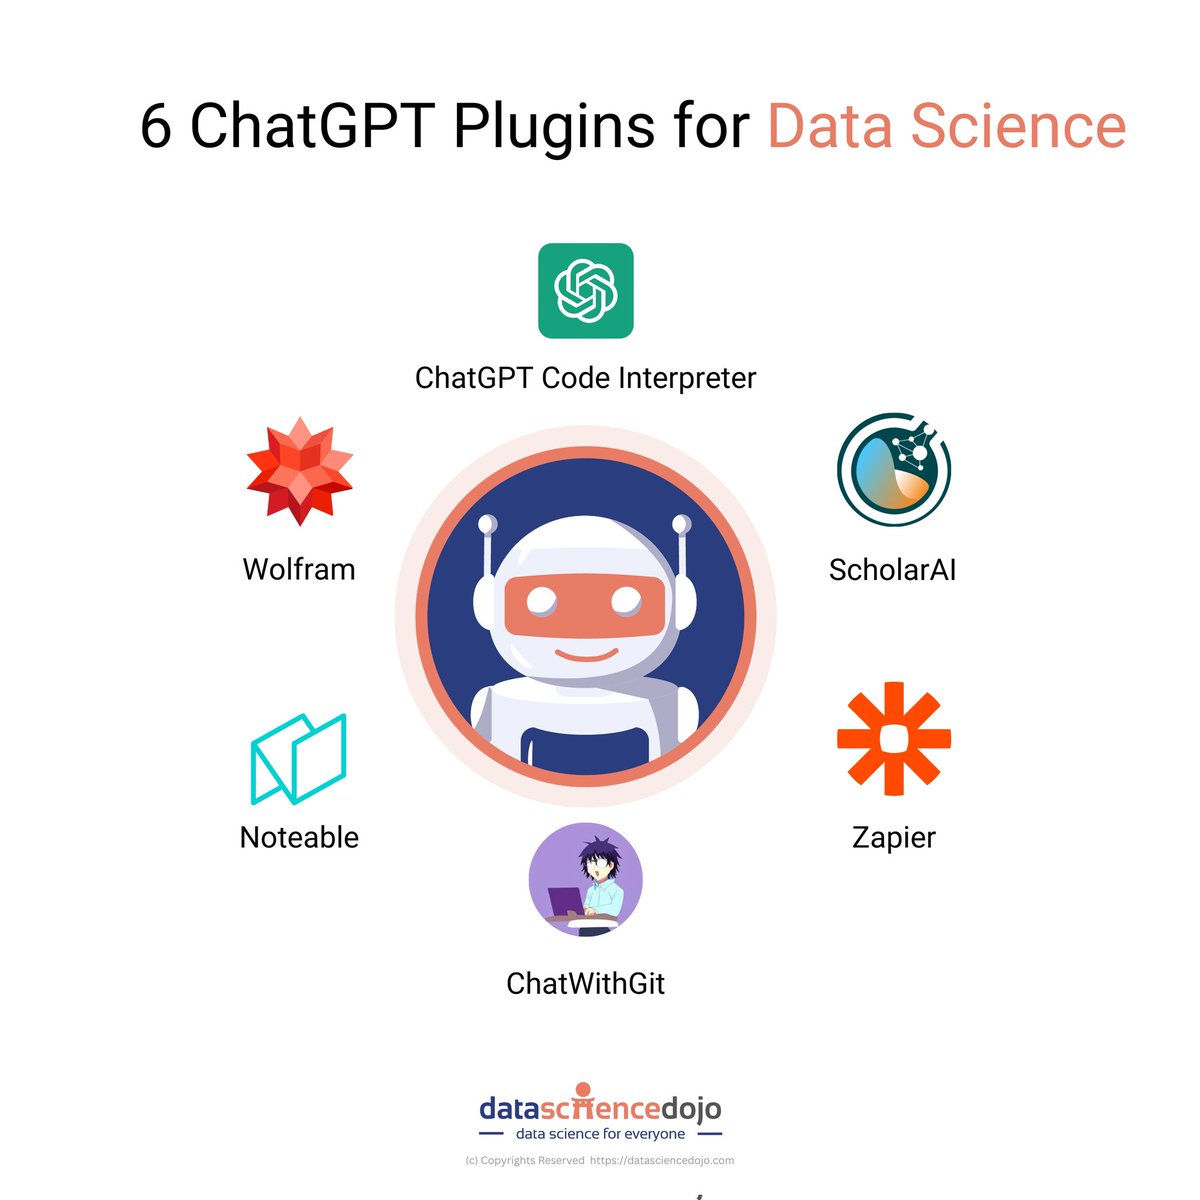 6 #ChatGPT plug-ins for #DataScience! #AI #MachineLearning #GenerativeAI #LLM #LLMs #Cloud #Python #Coding #100DaysOfCode datasciencedojo.com/blog/6-chatgpt… @DataScienceDojo @SpirosMargaris @CurieuxExplorer @PawlowskiMario @mvollmer1 @gvalan @ipfconline1 @LaurentAlaus @Shi4Tech…